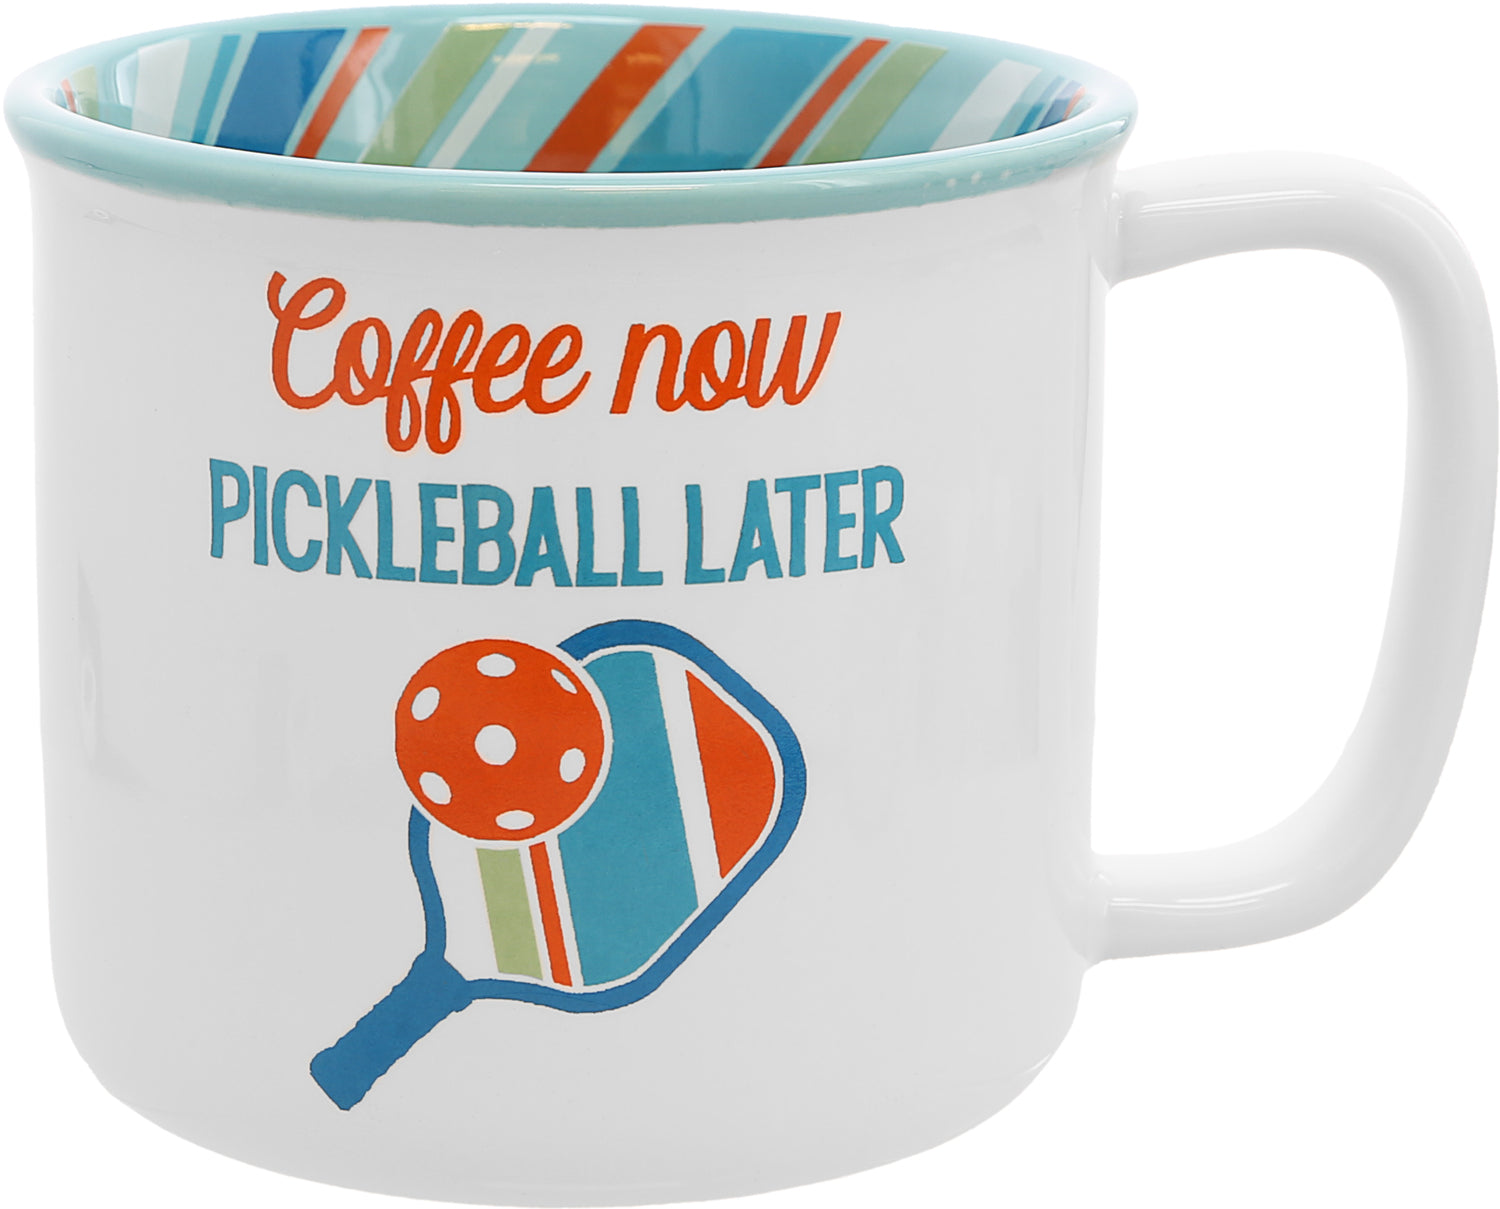 Coffee Now Pickleball Later Mug